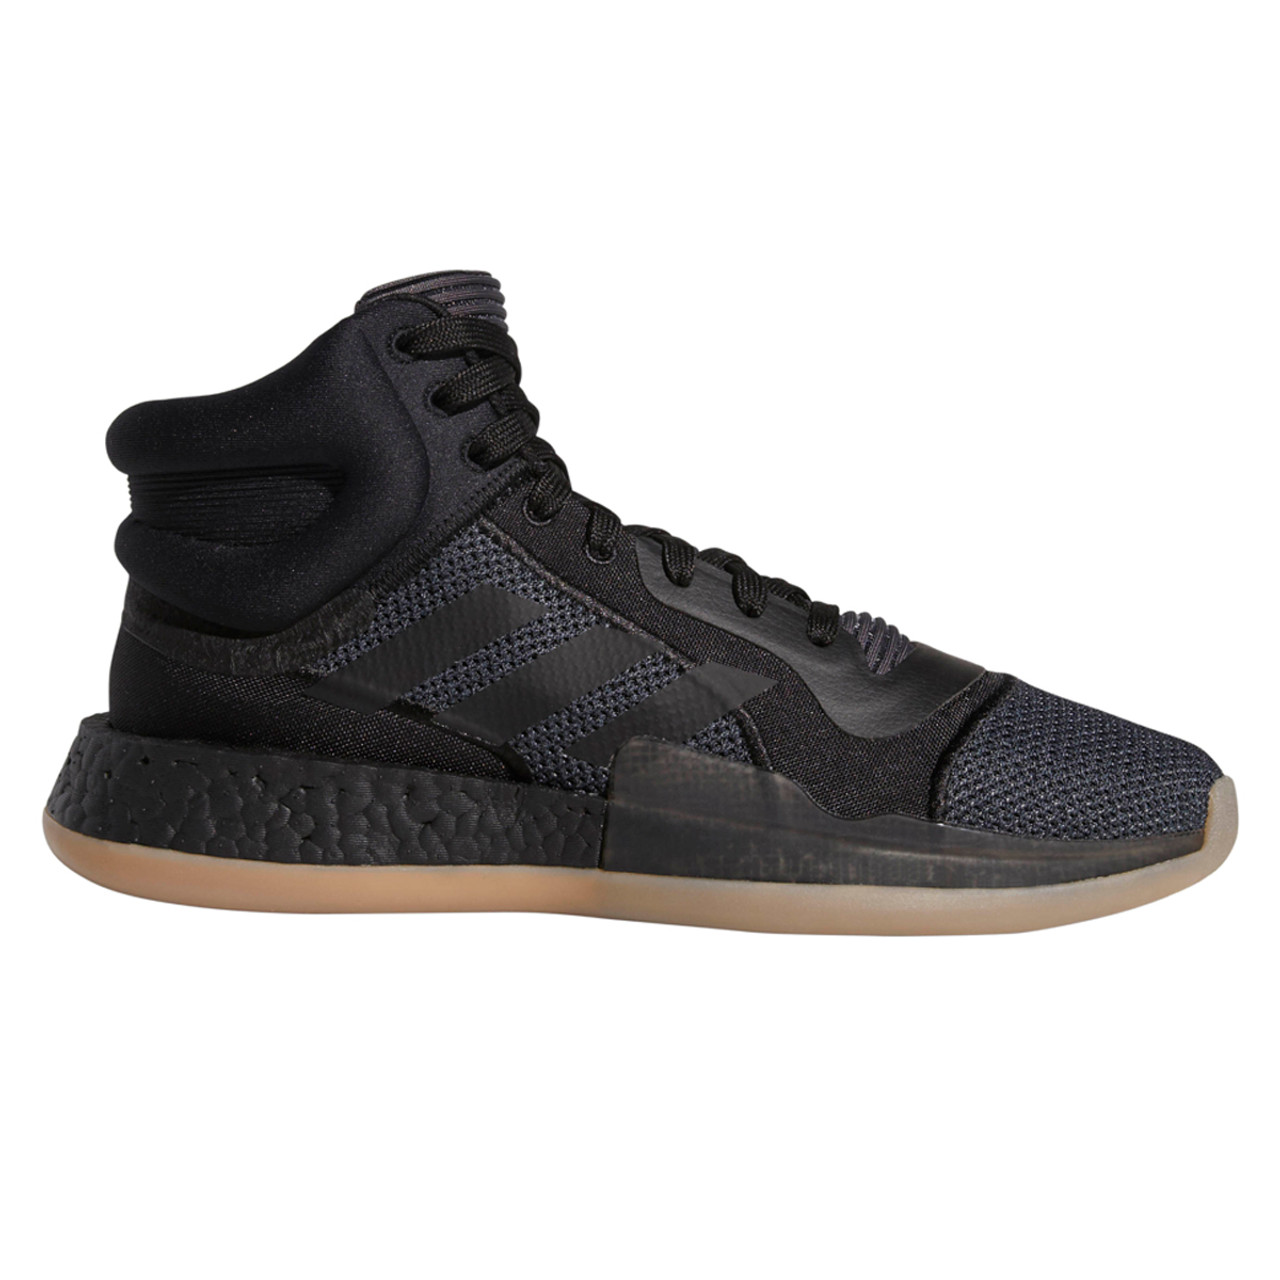 Adidas Marquee Men's Basketball Sneakers BB9300 - Gray, Black - everysportforless.com